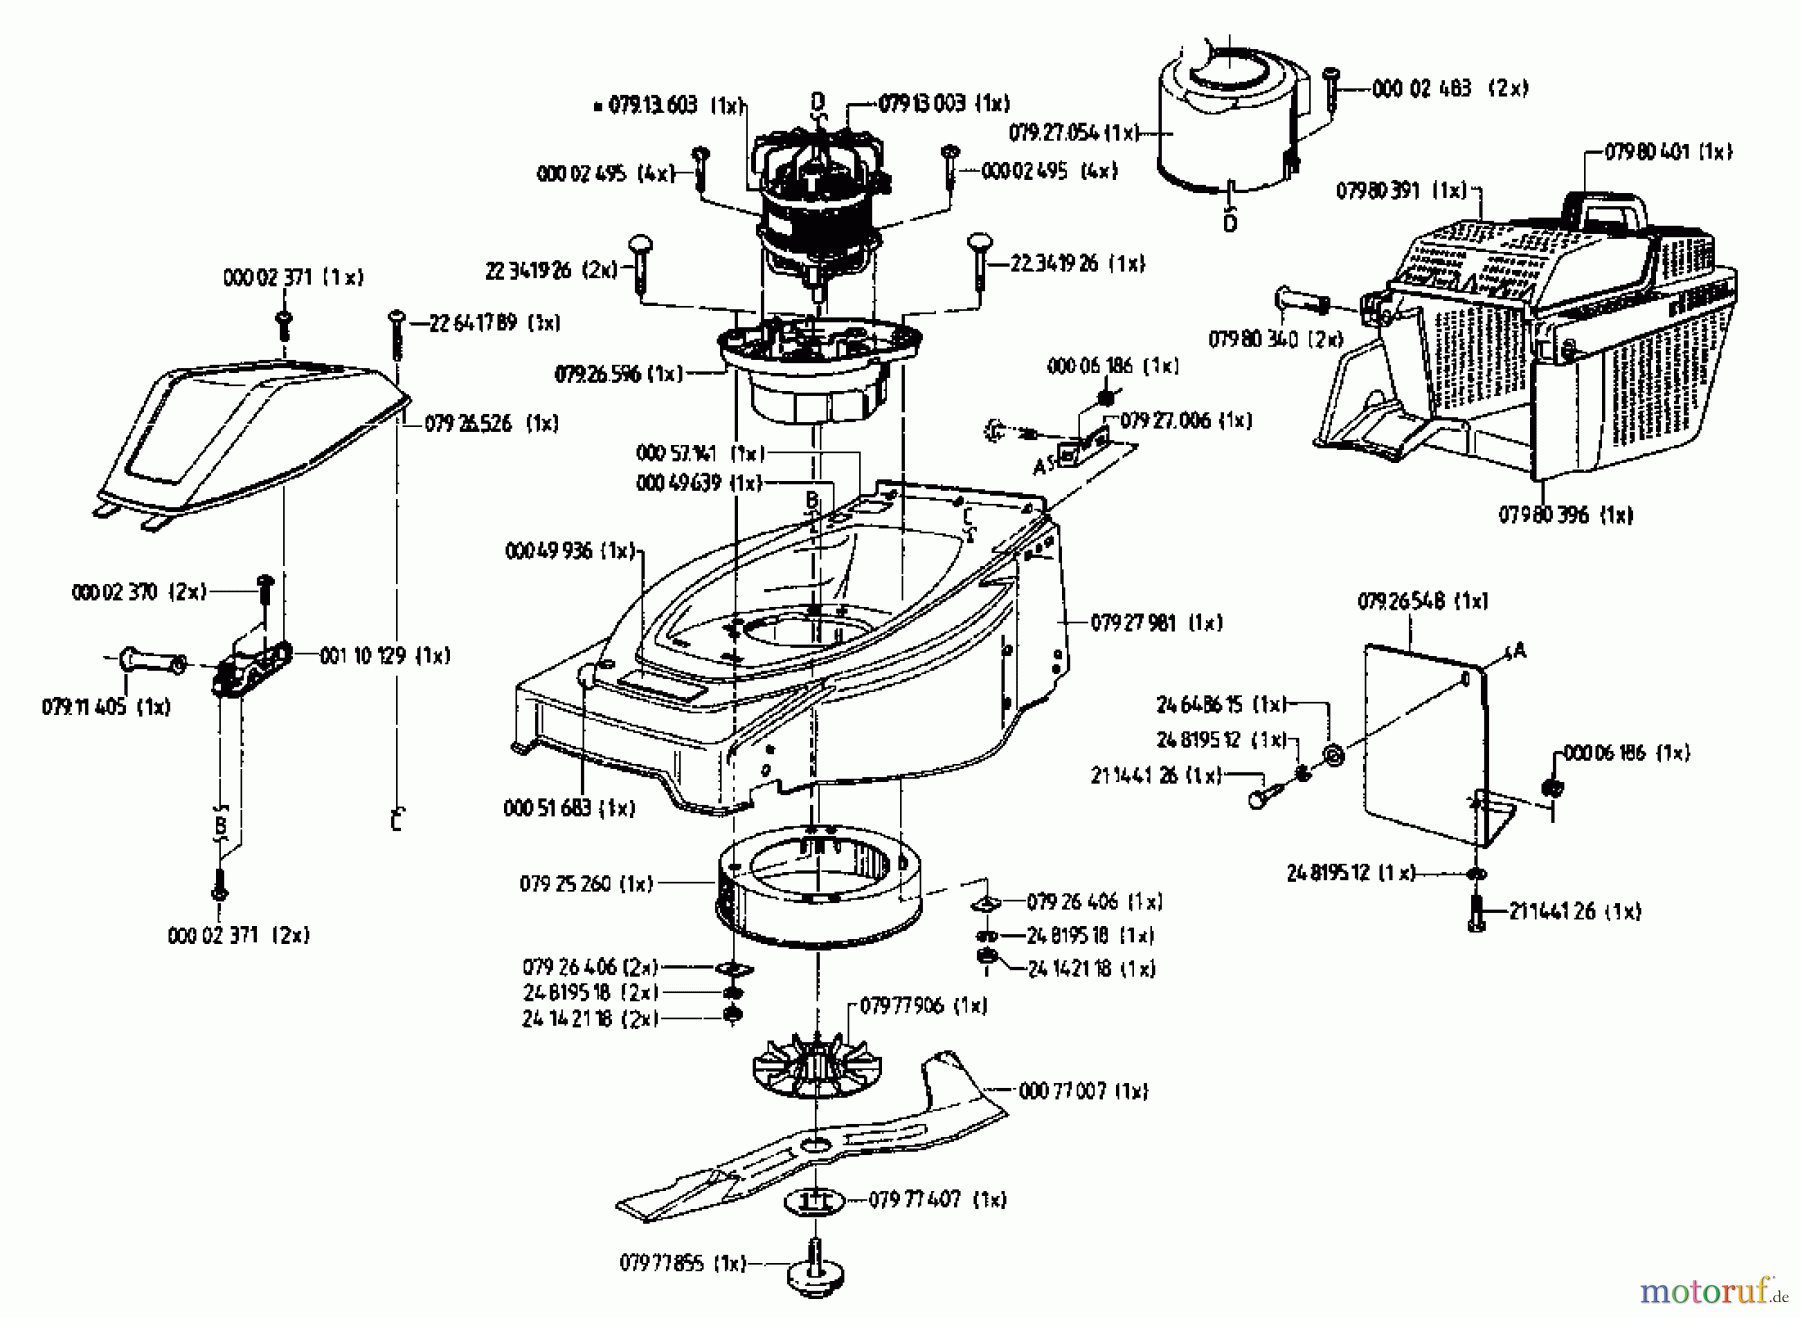  Gutbrod Electric mower HE 42 L 04030.03  (1996) Basic machine